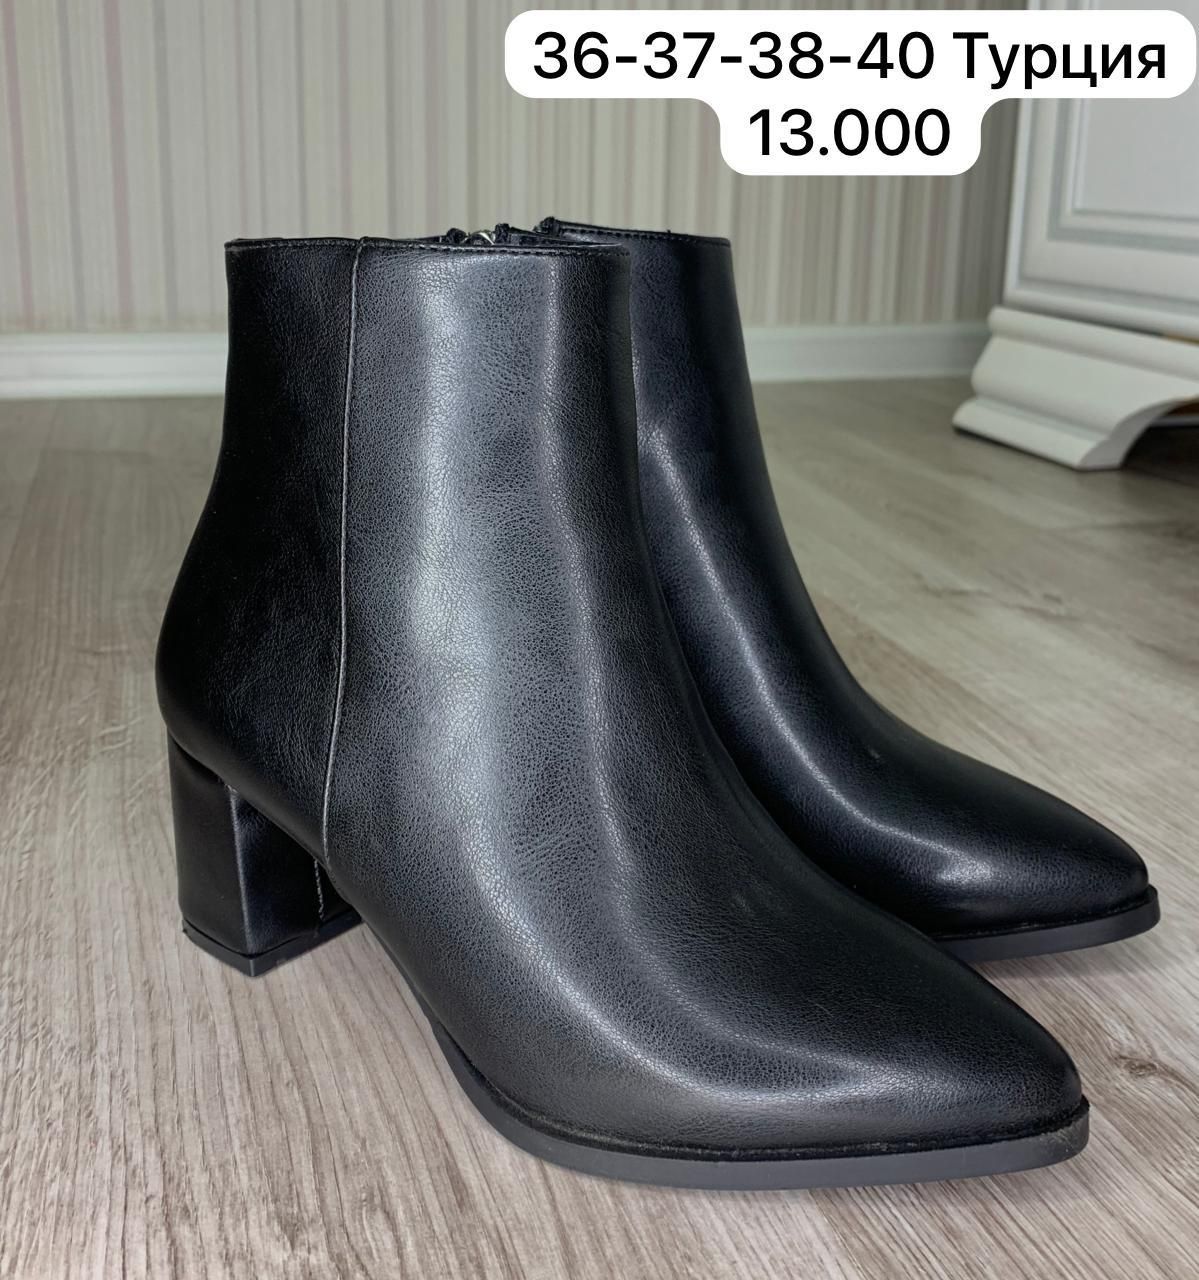 Женские обуви турецкие